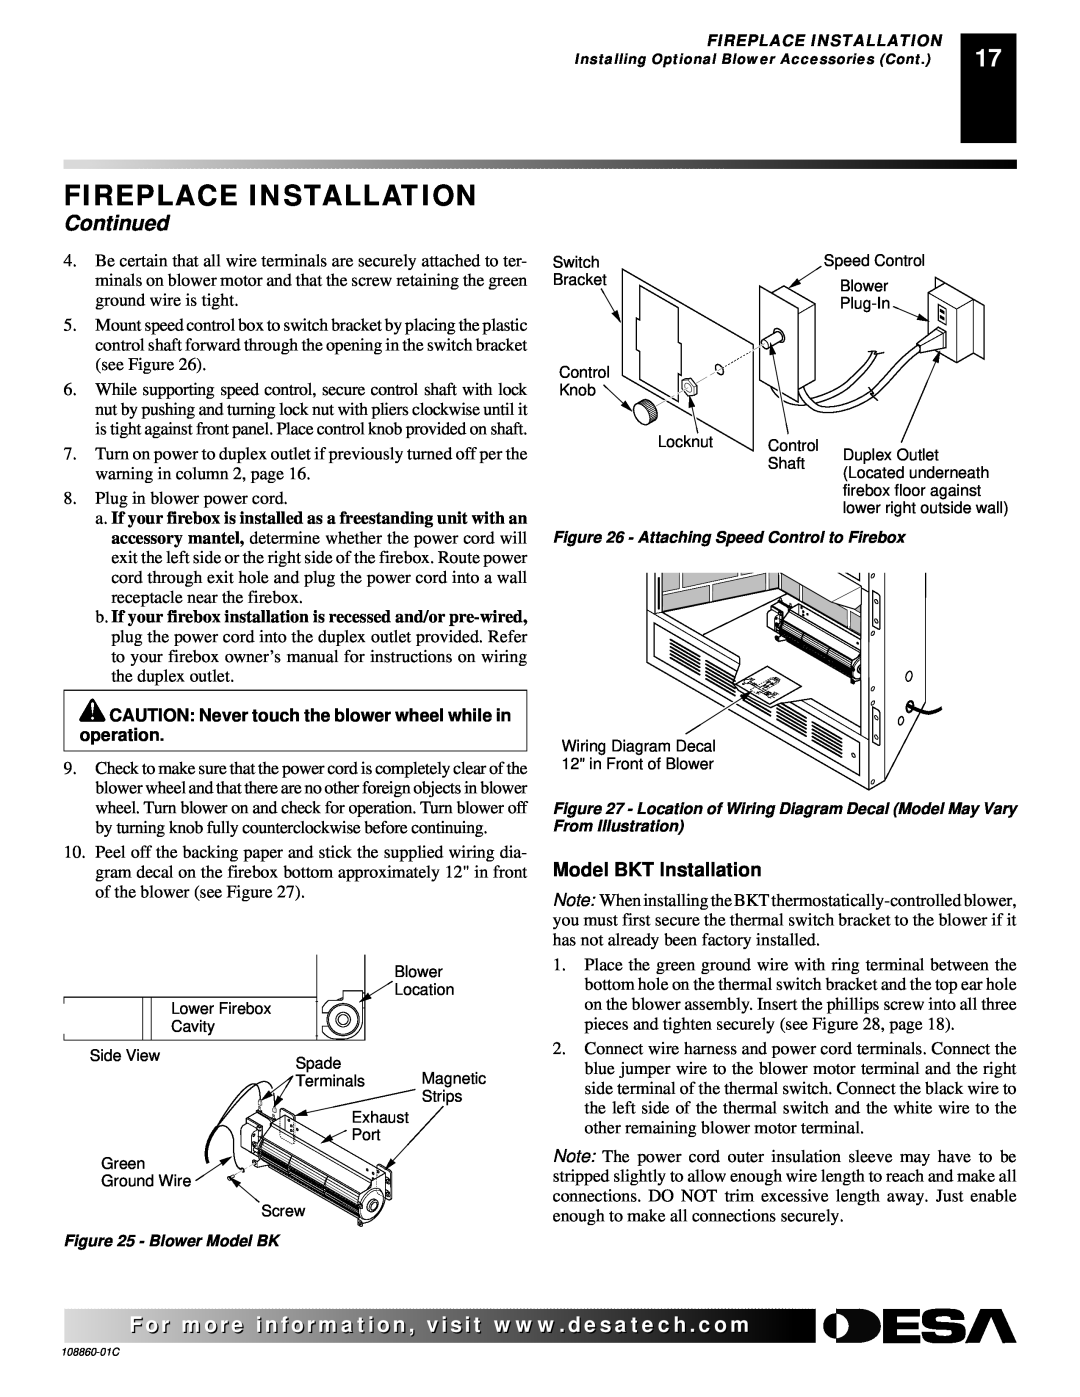 Desa (V)T36EN, (V)T36EP installation manual Fireplace Installation, Continued, Model BKT Installation 